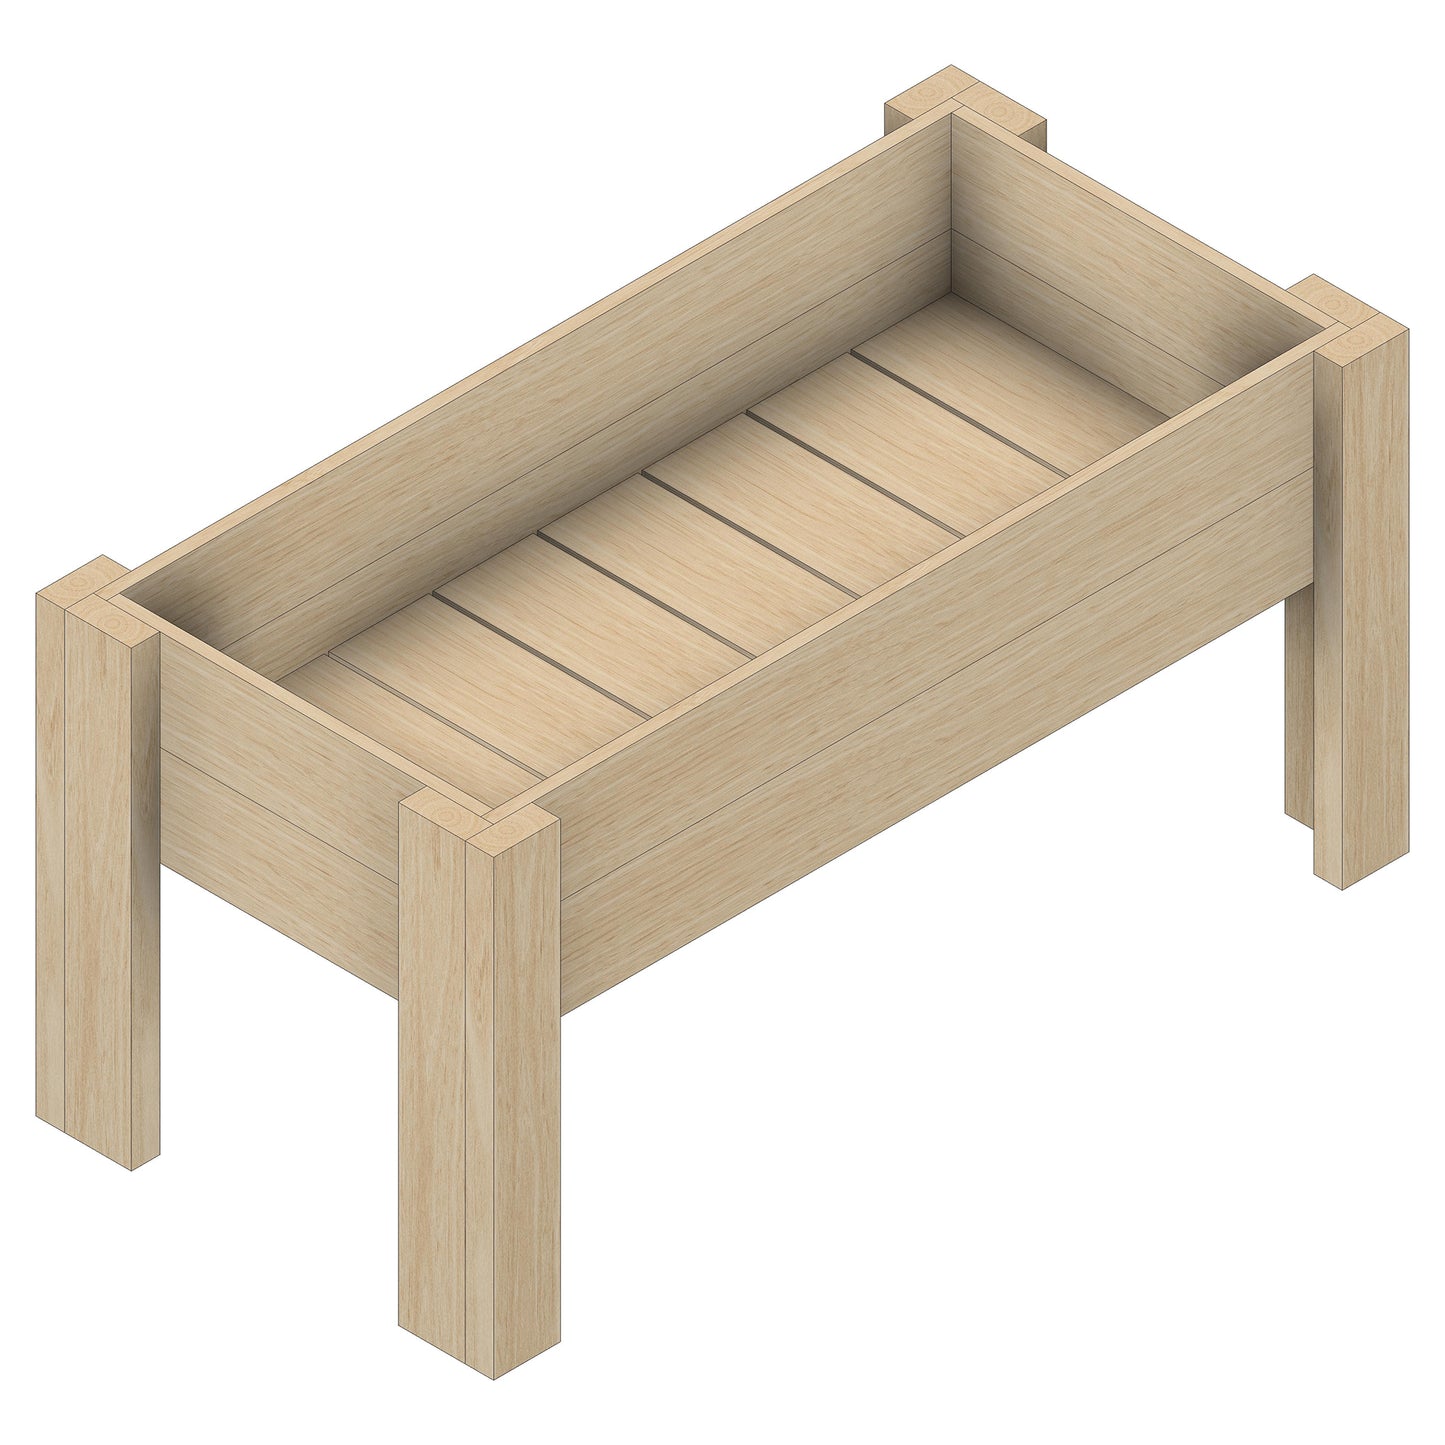 Raised Cedar Planter Box (Various Options)